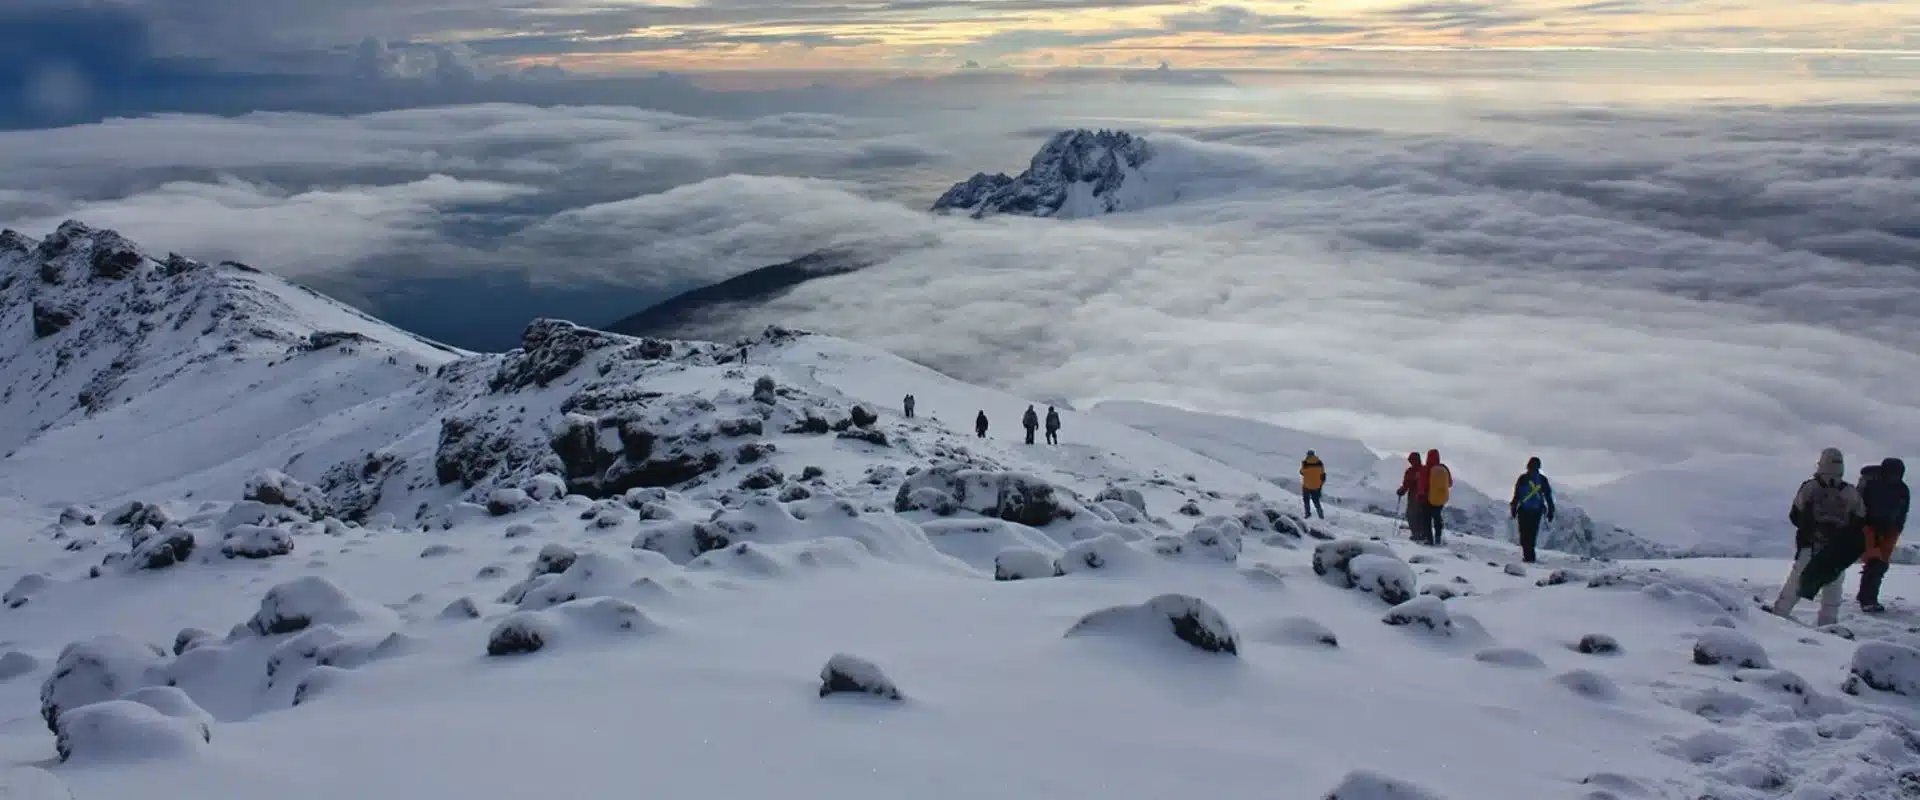 Harsh weather on Kilimanjaro